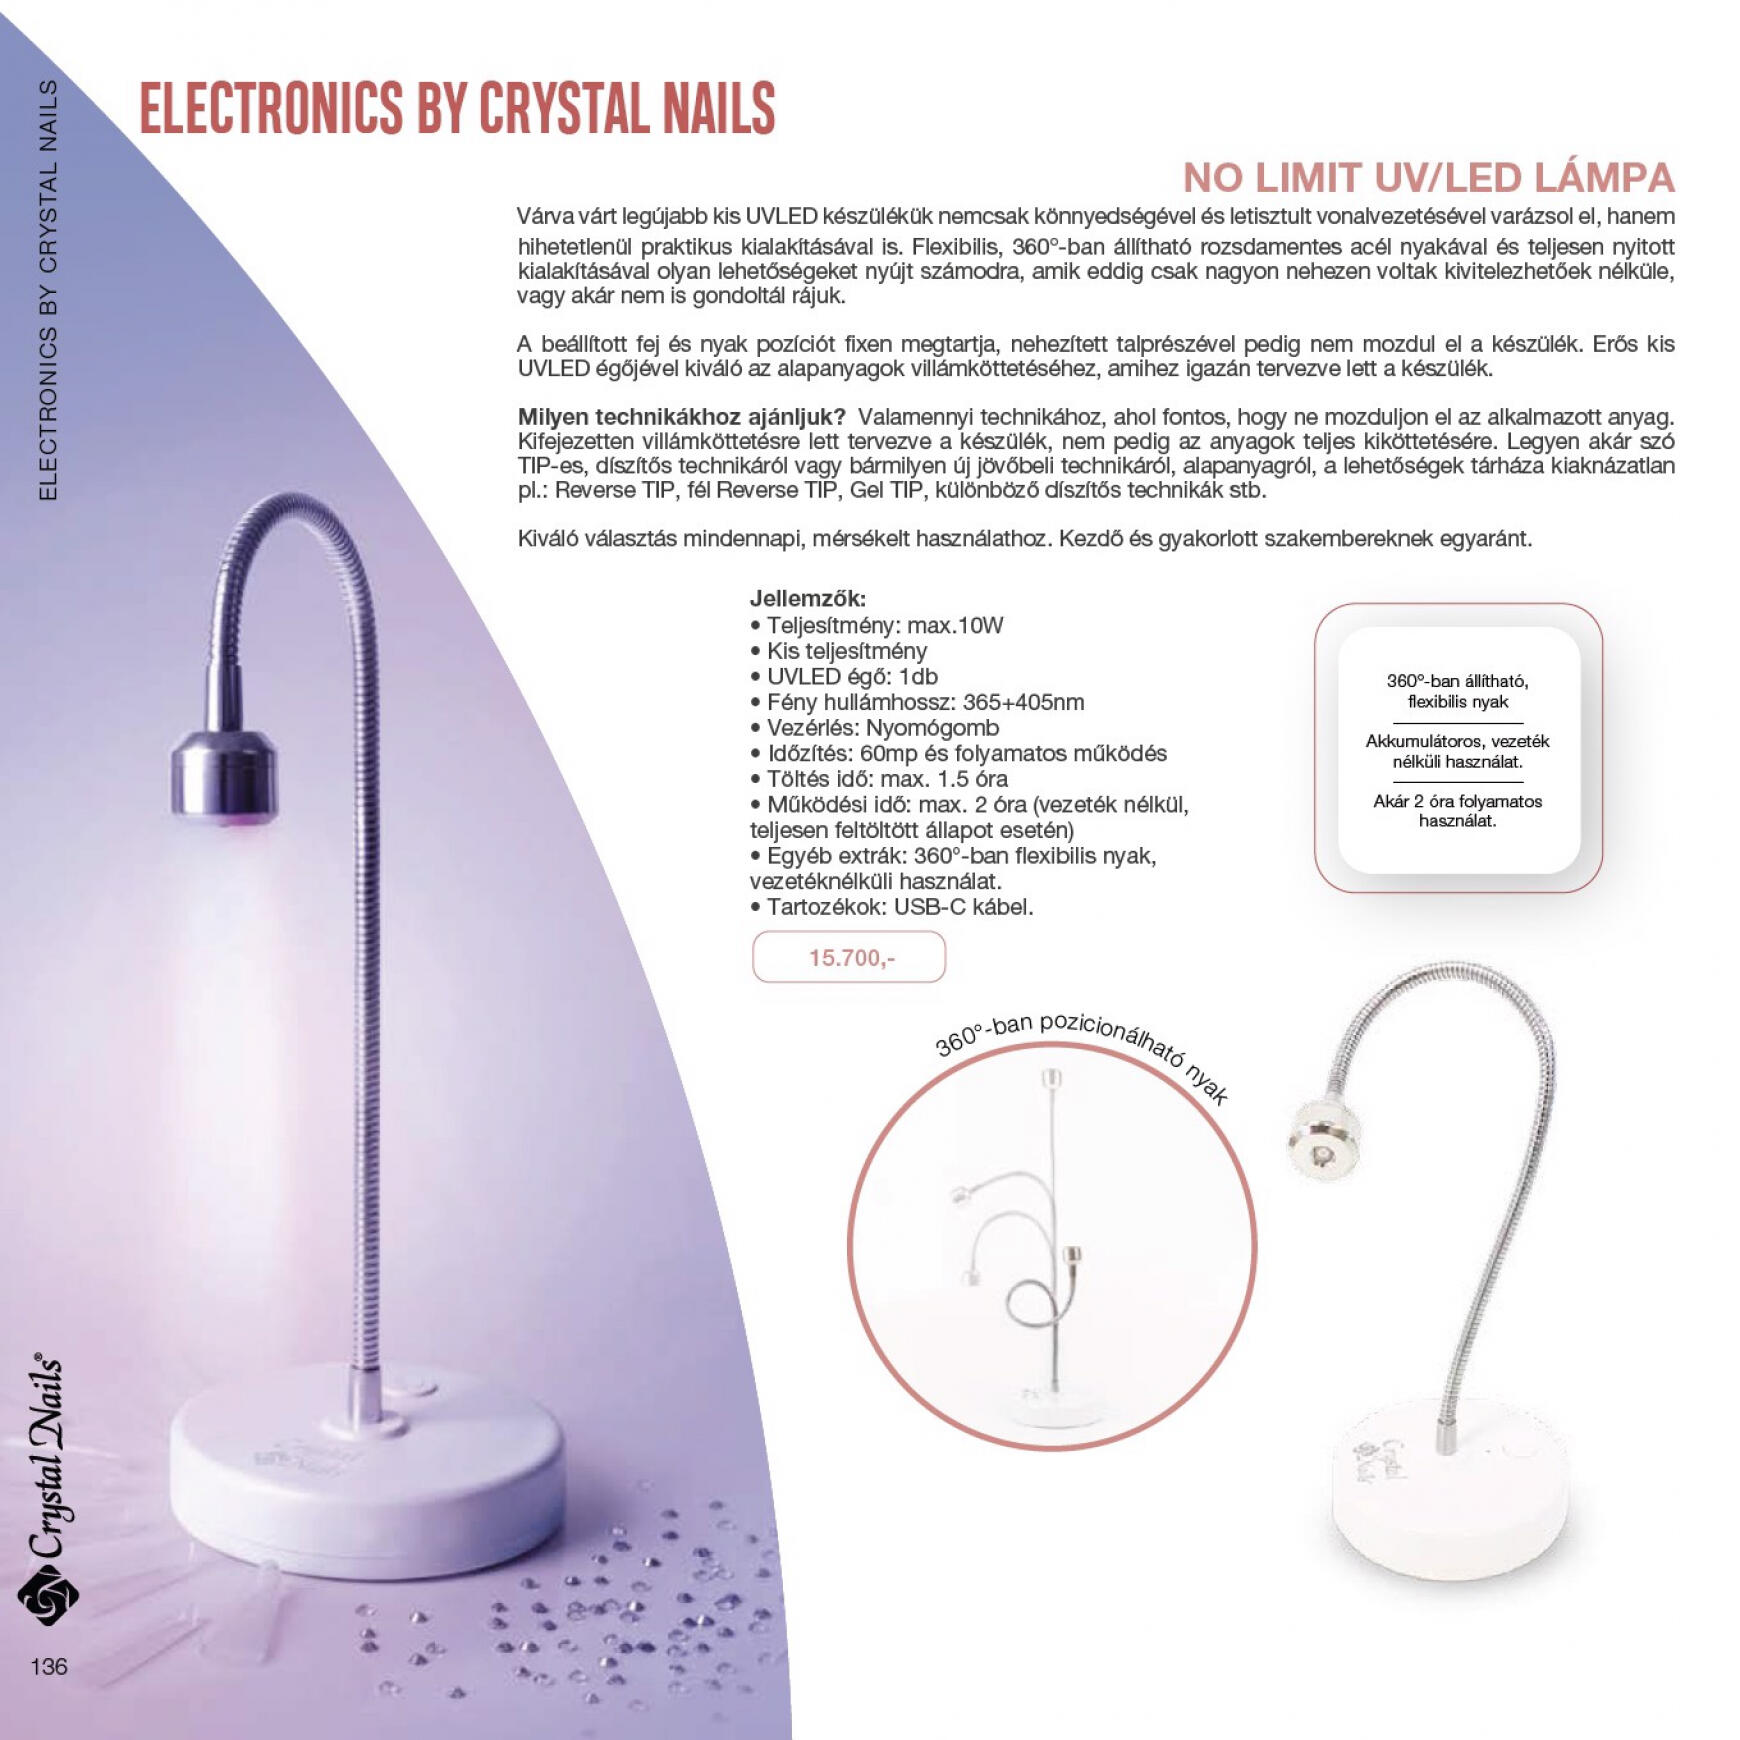 crystal-nails - Aktuális újság Crystal Nails 05.01. - 12.31. - page: 136